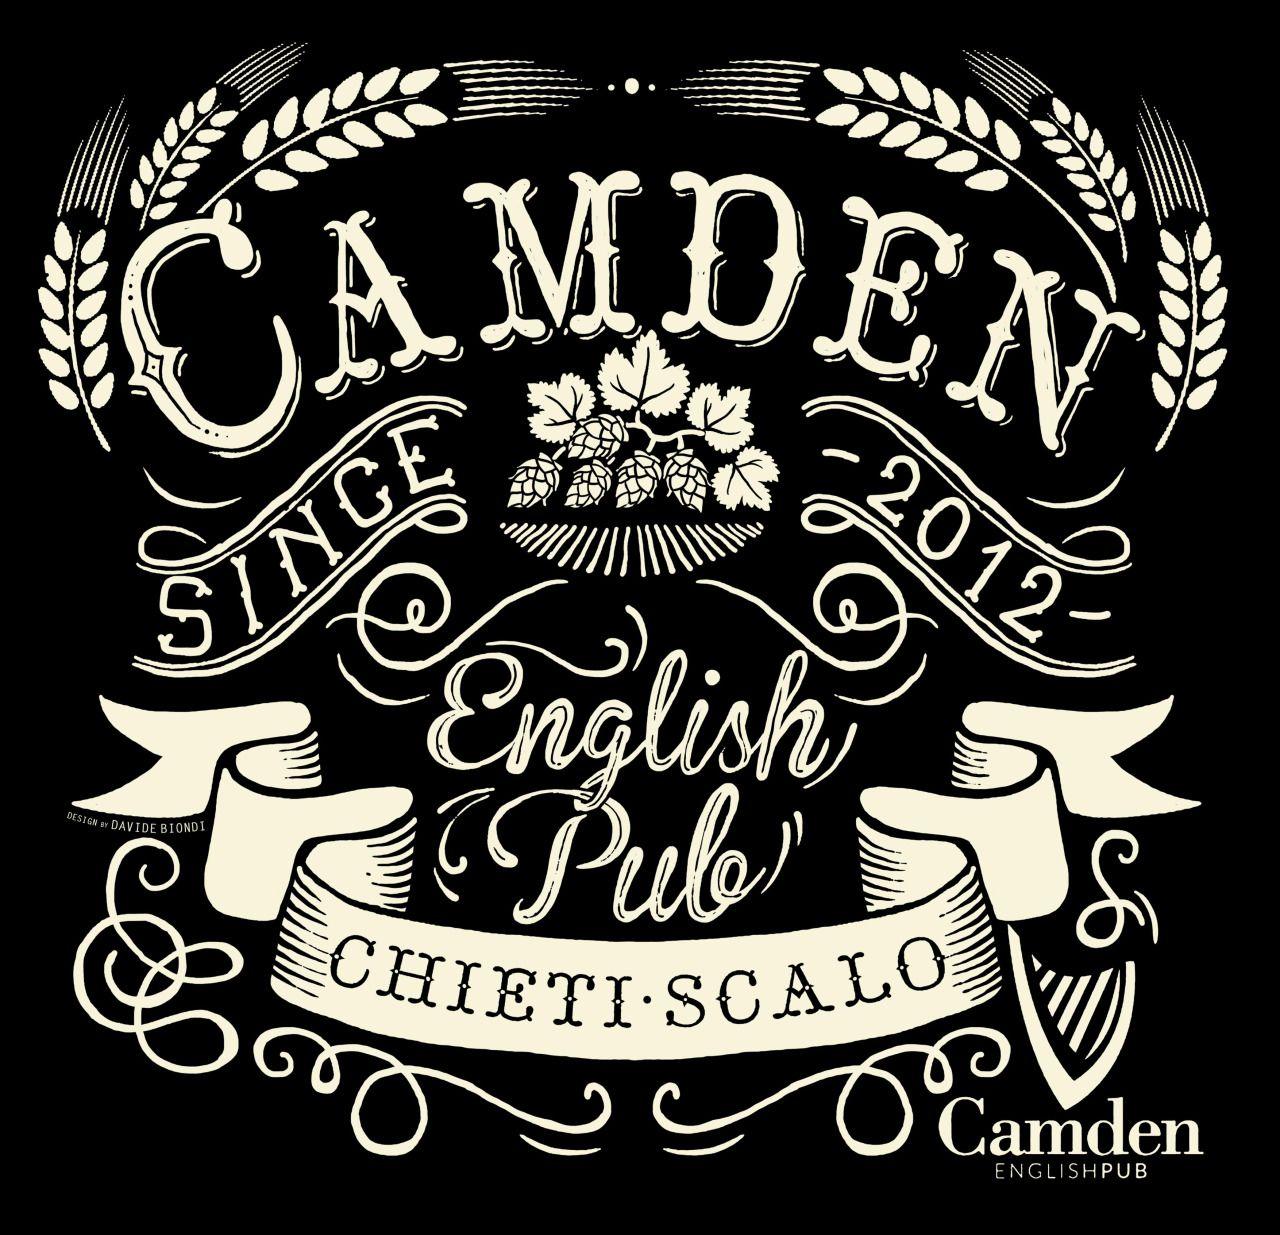 English Pub Logo - Camden English Pub #Lettering. Signs & ideas w great quotes